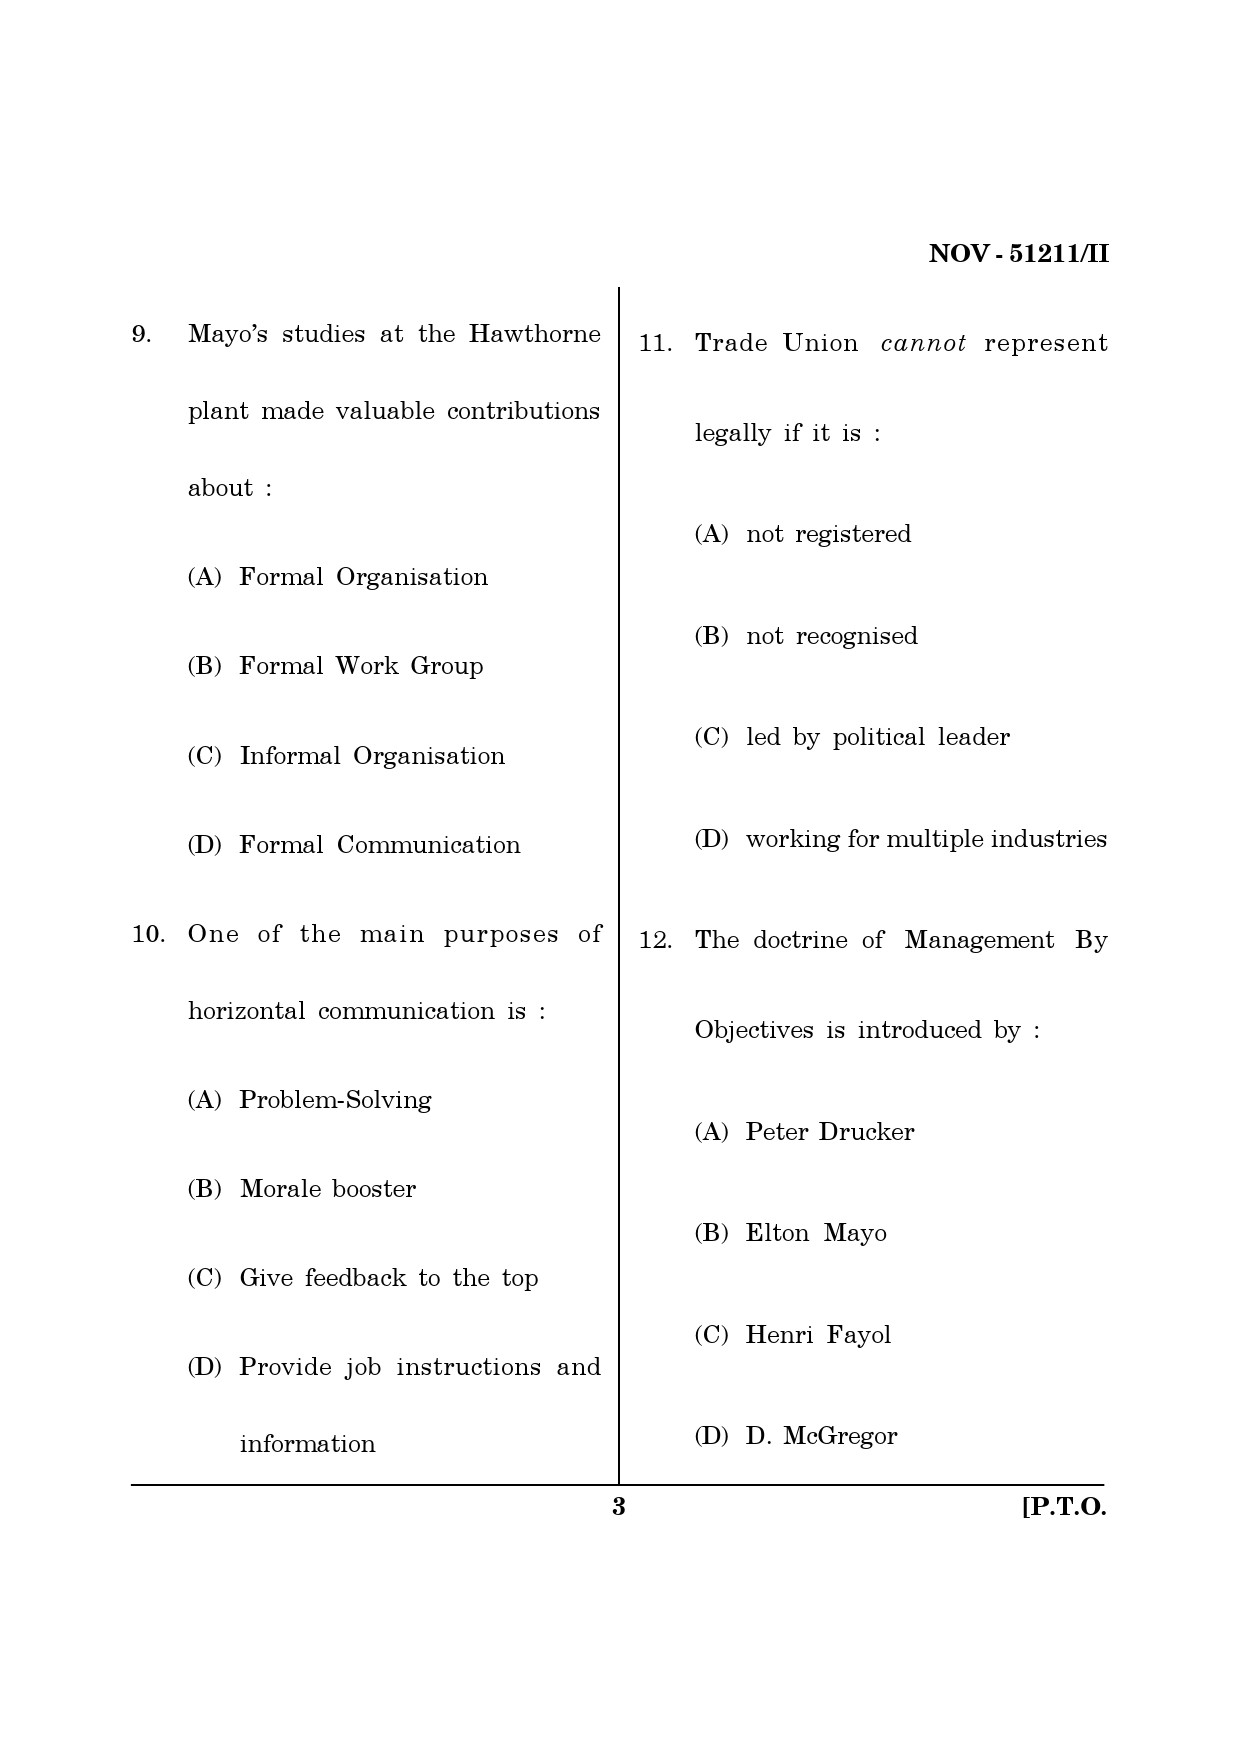 Maharashtra SET Management Question Paper II November 2011 3